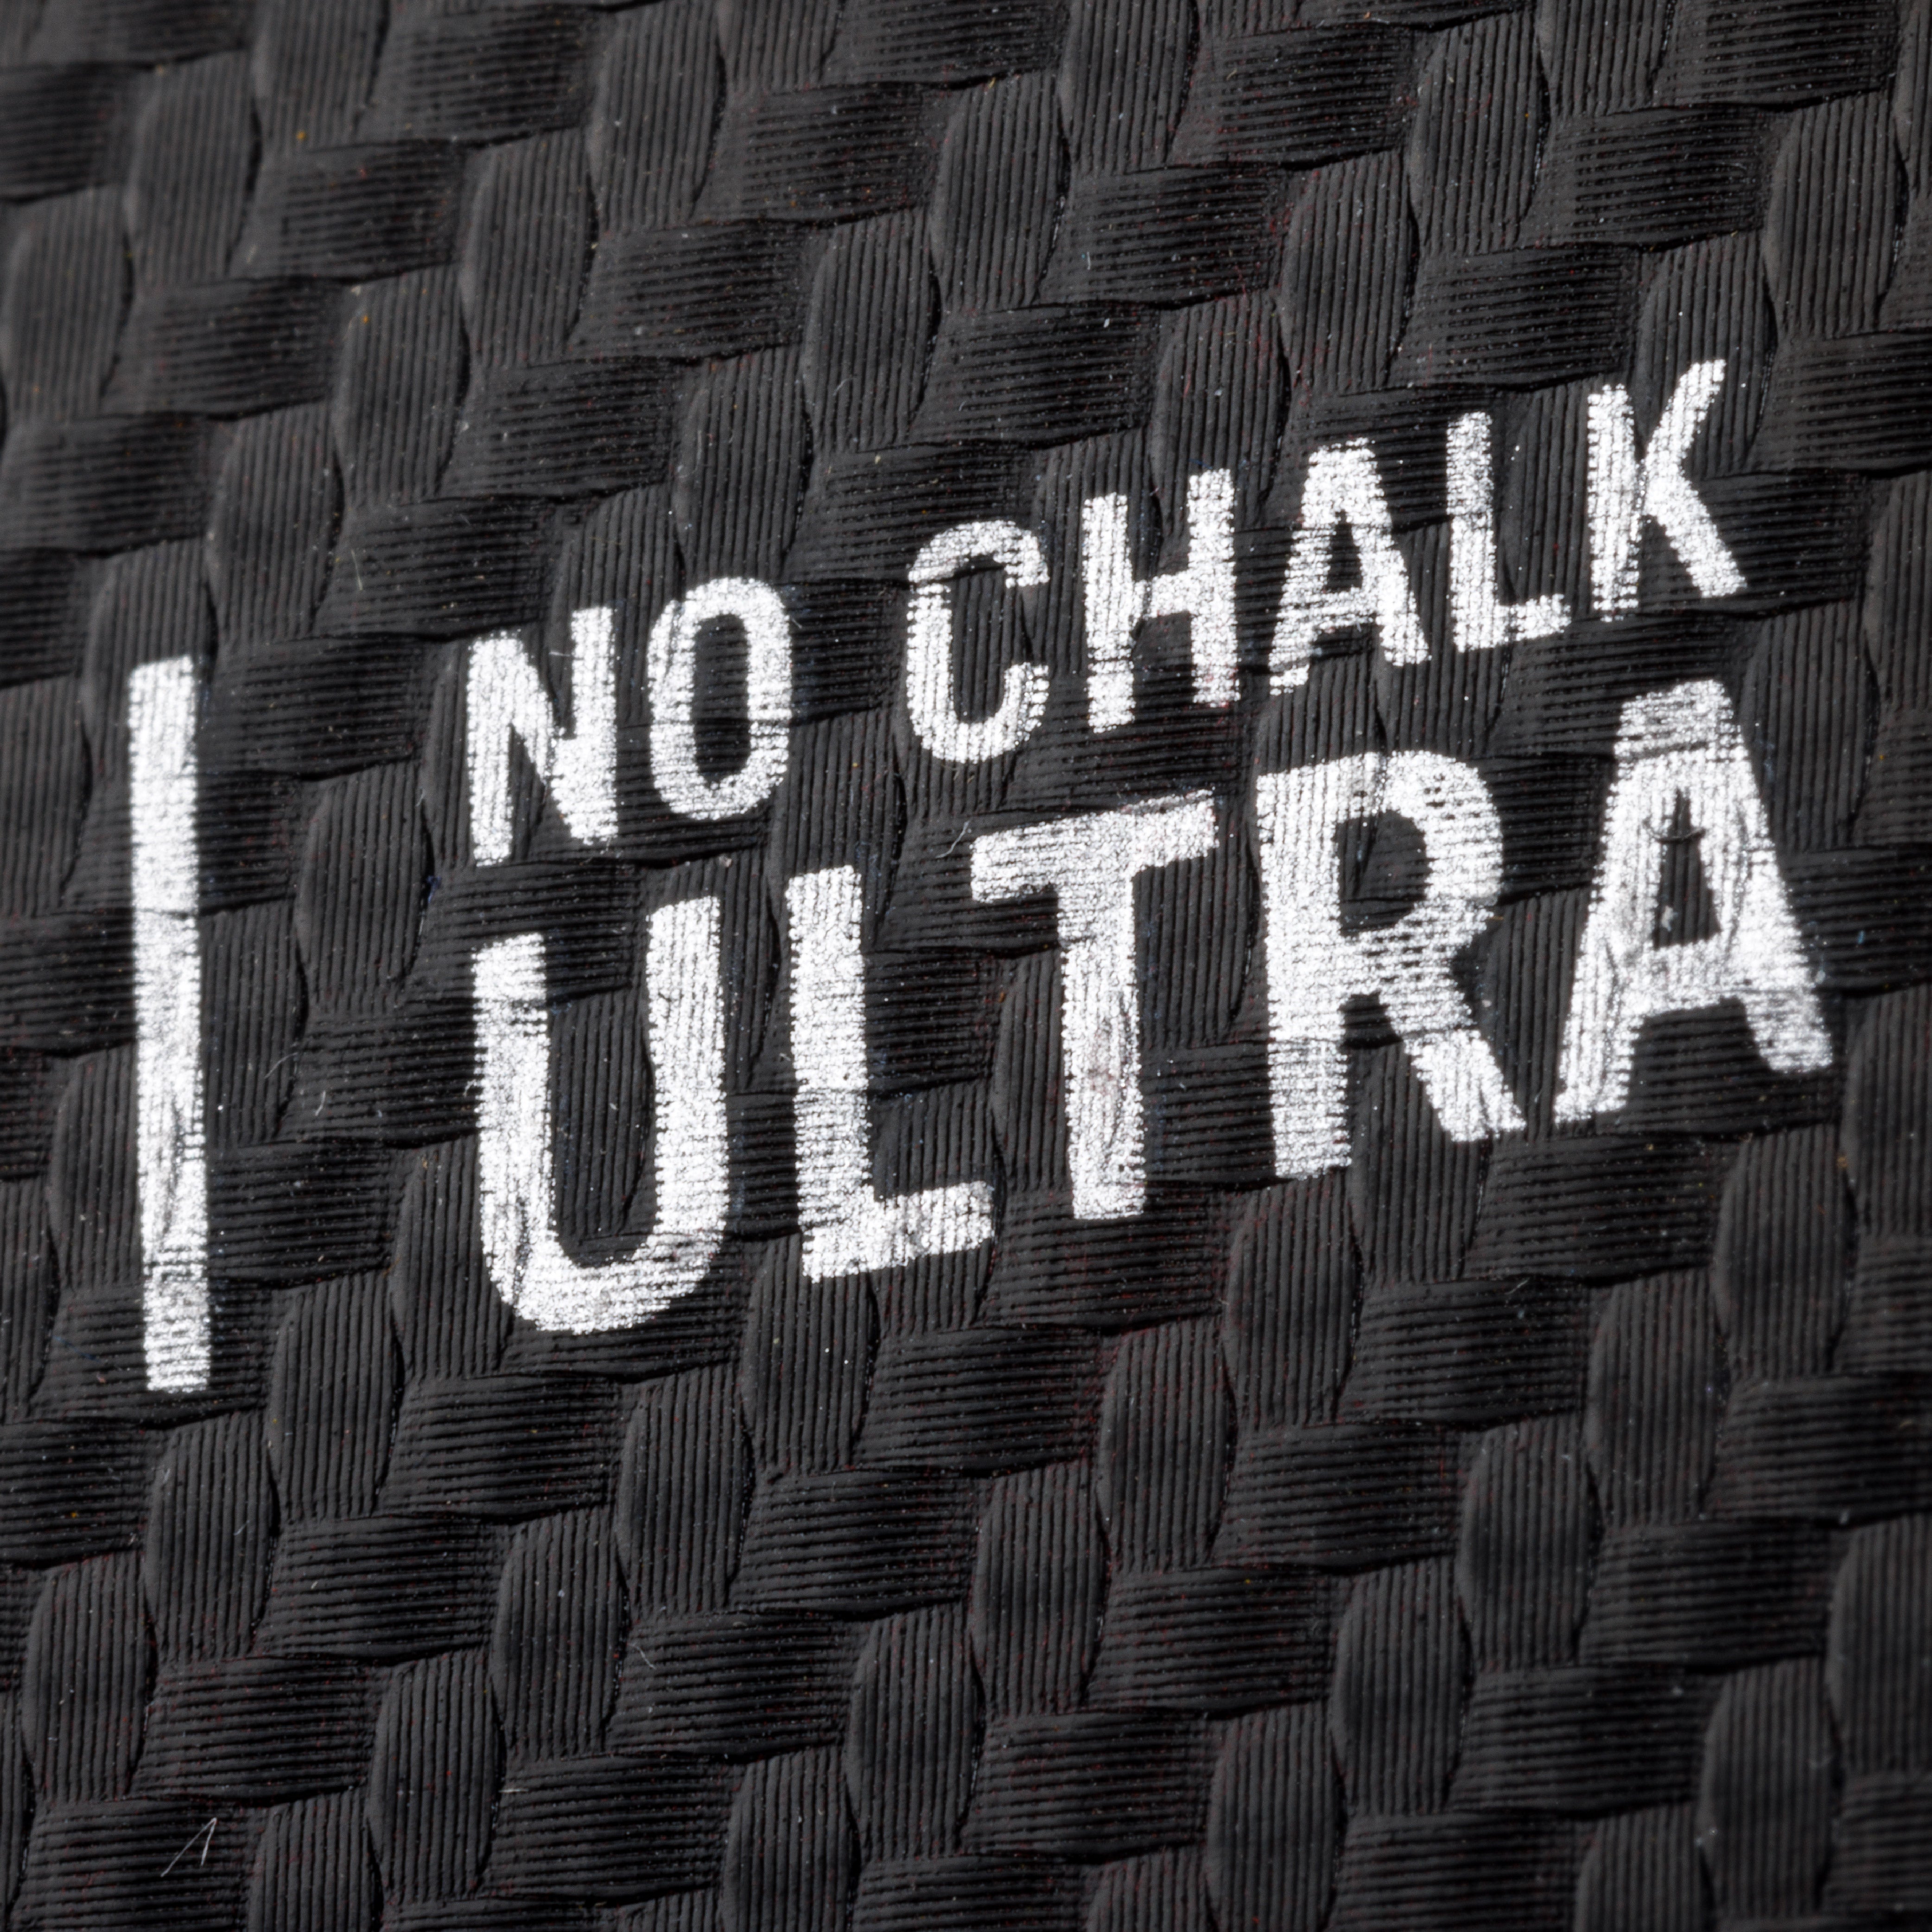 ZEUZ Ultra Fitness & Crossfit Grips - No Chalk